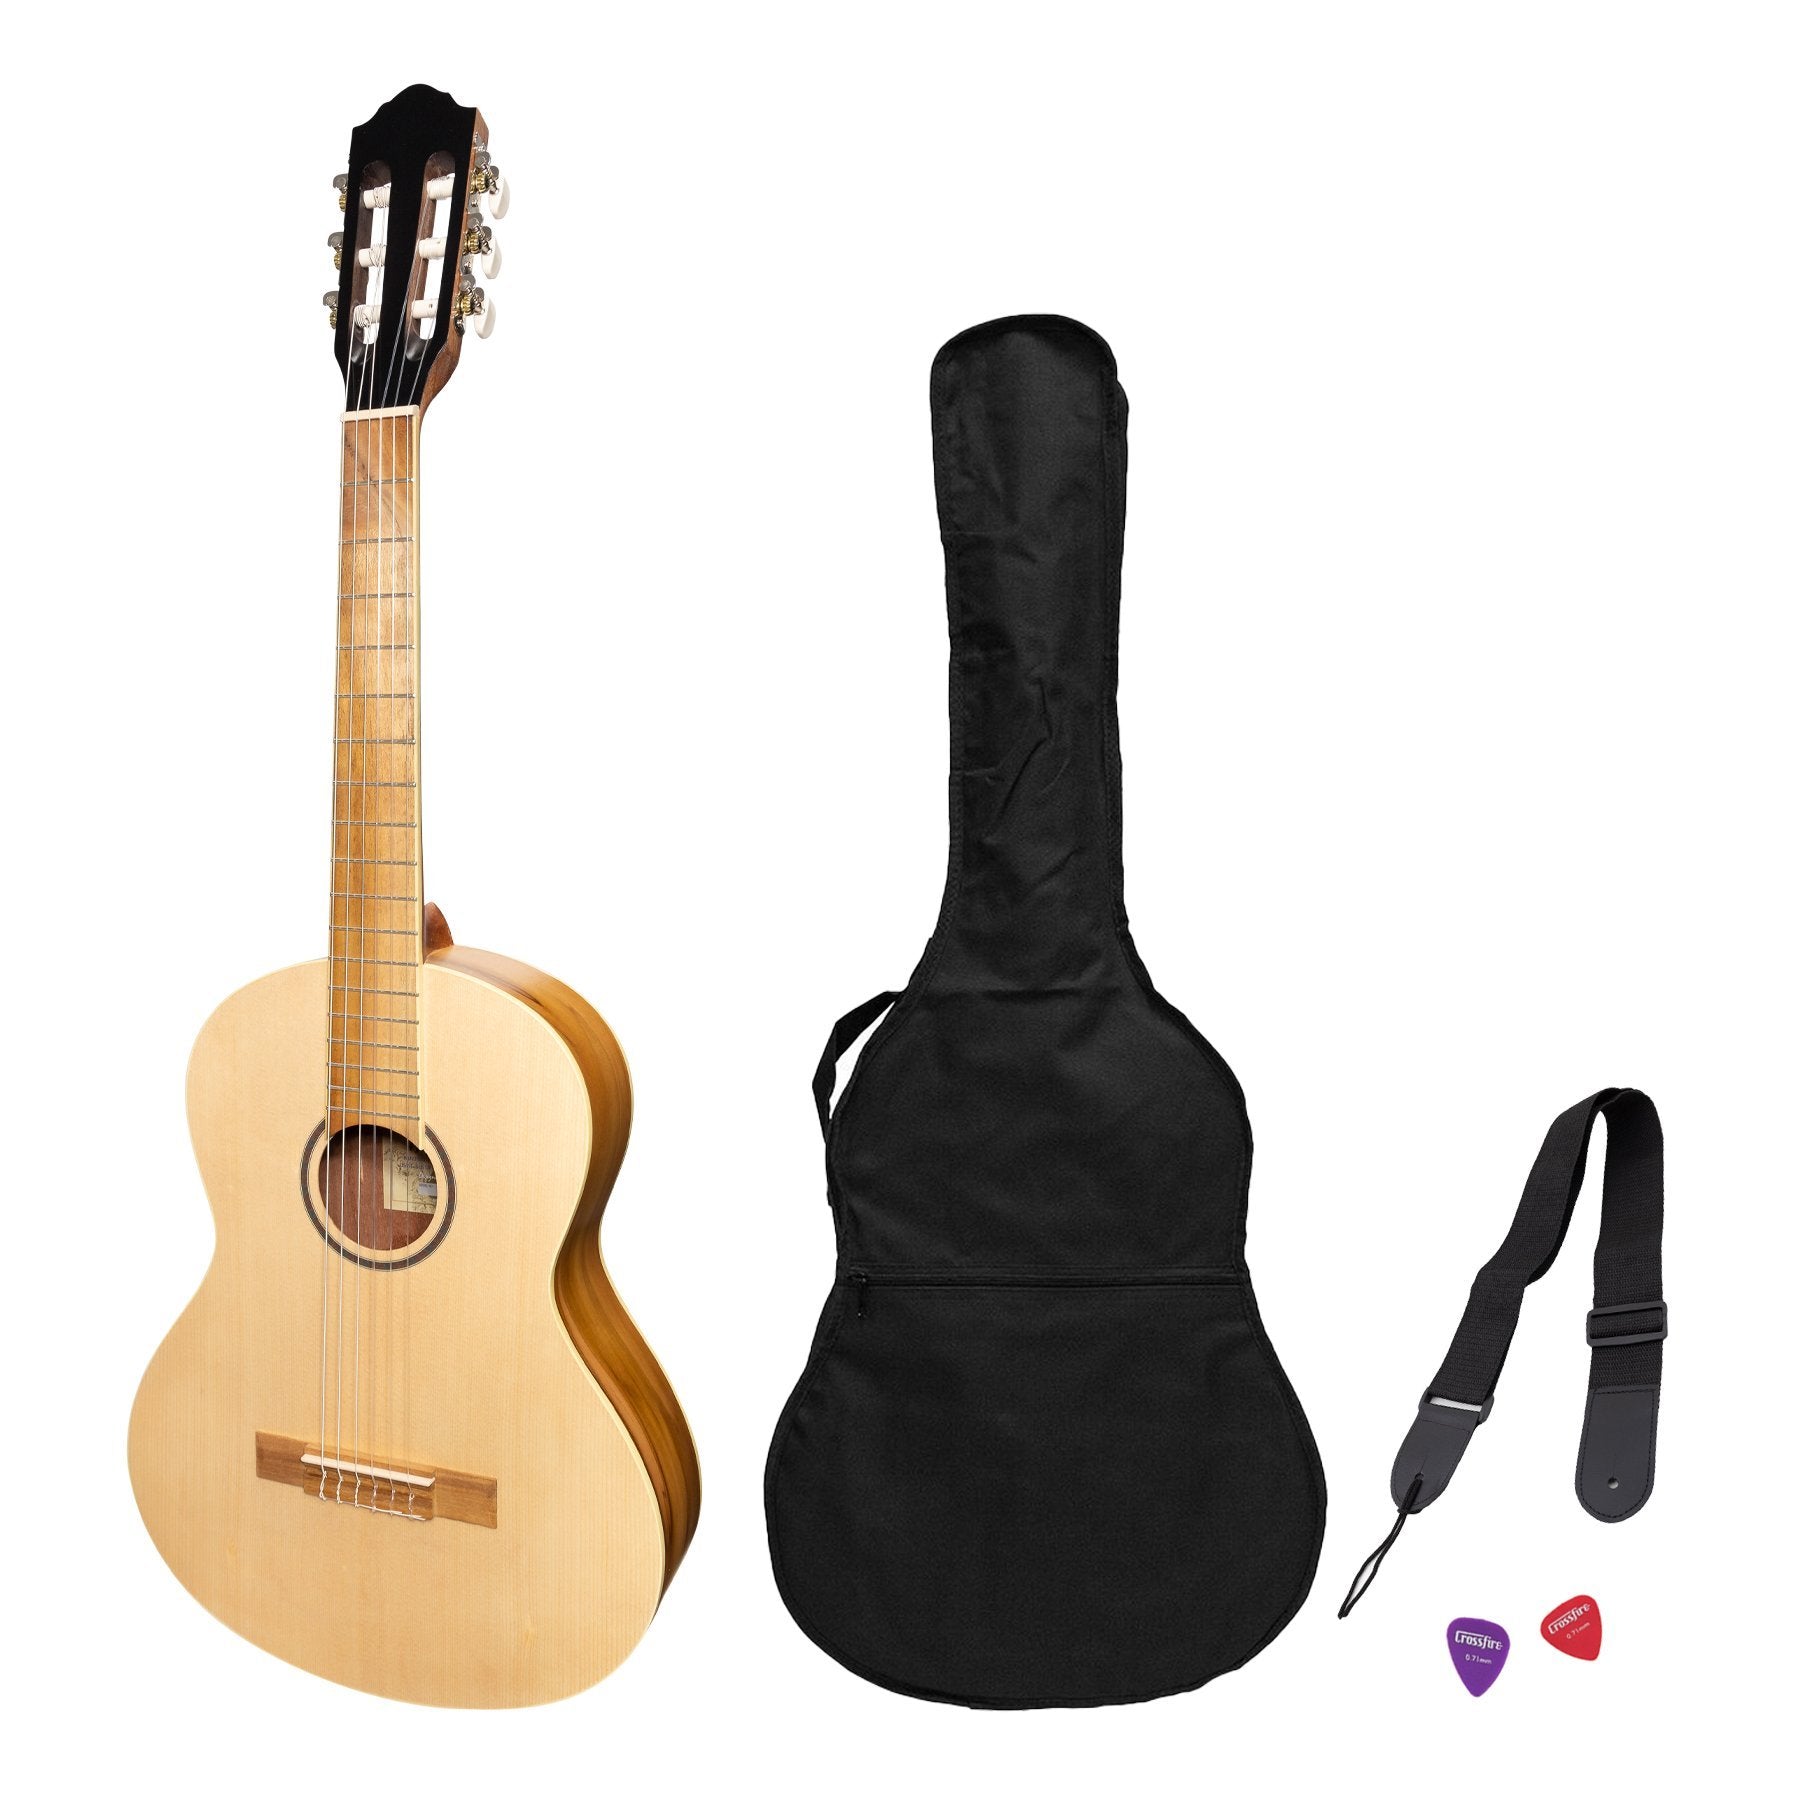 Martinez 'Slim Jim' 3/4 Size Student Classical Guitar Pack with Built In Tuner (Spruce/Jati-Teakwood)-MP-SJ34T-SJ